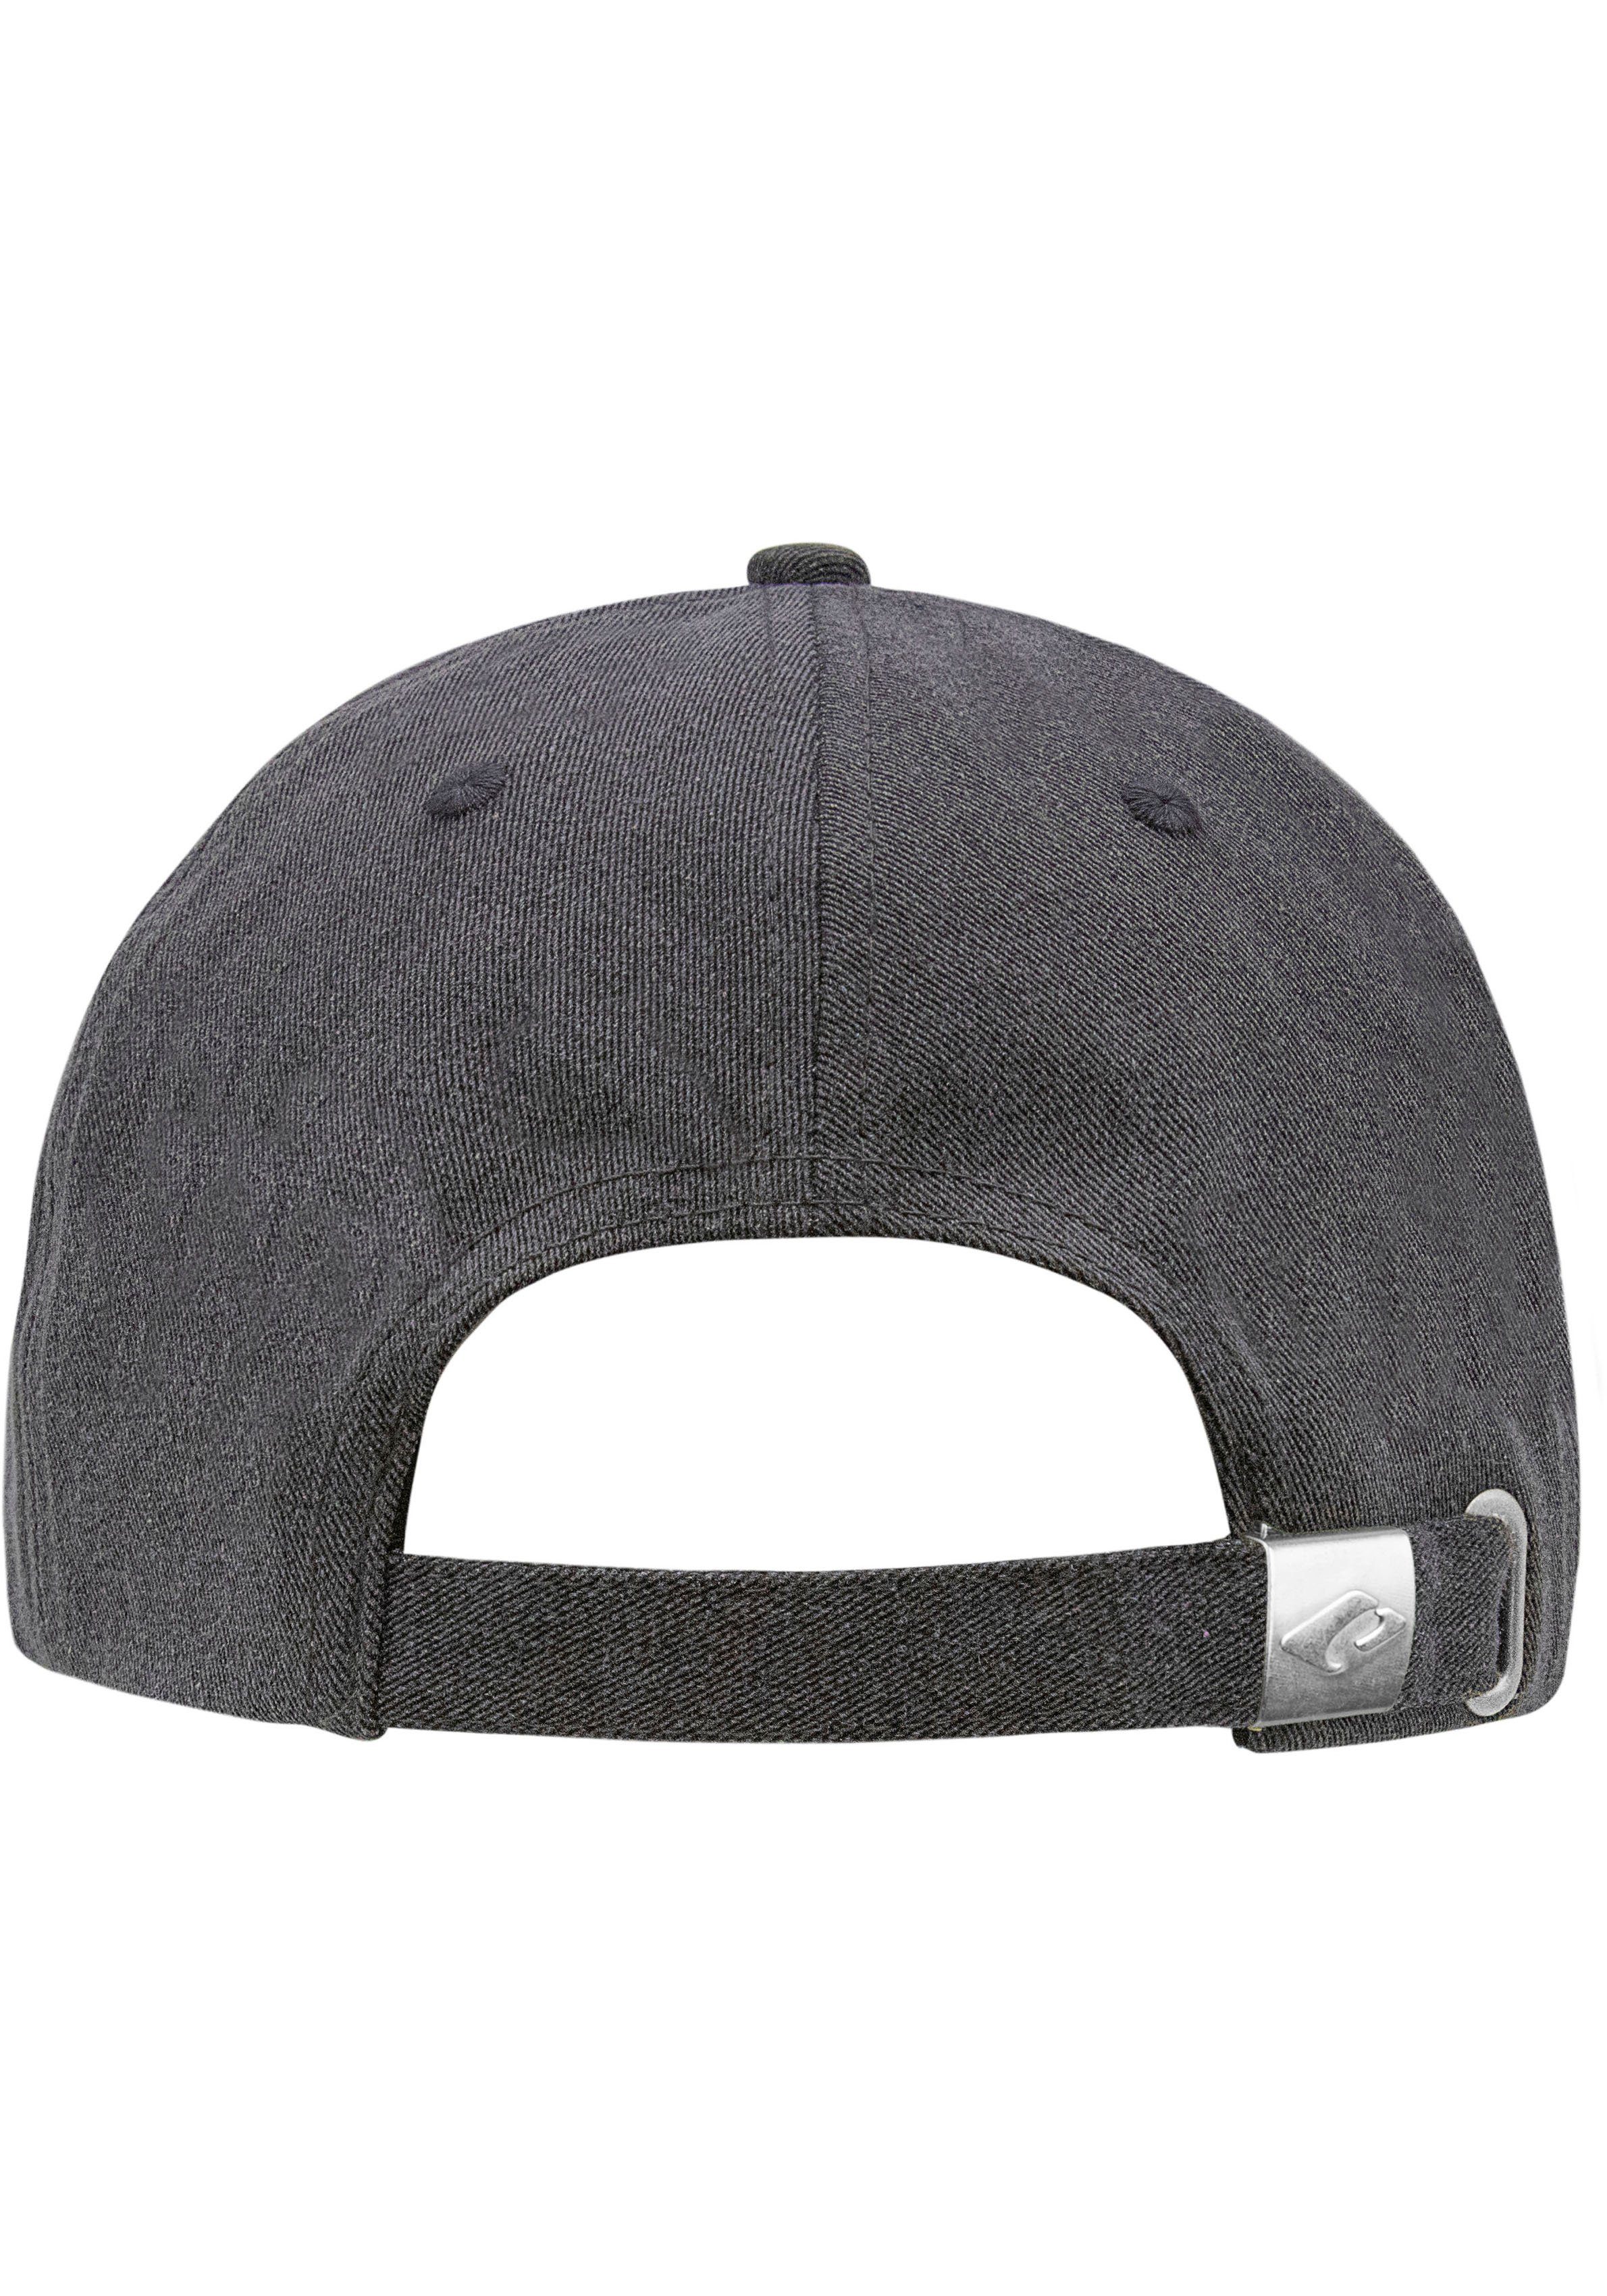 chillouts Baseball dunkelgrau Arklow Hat Cap